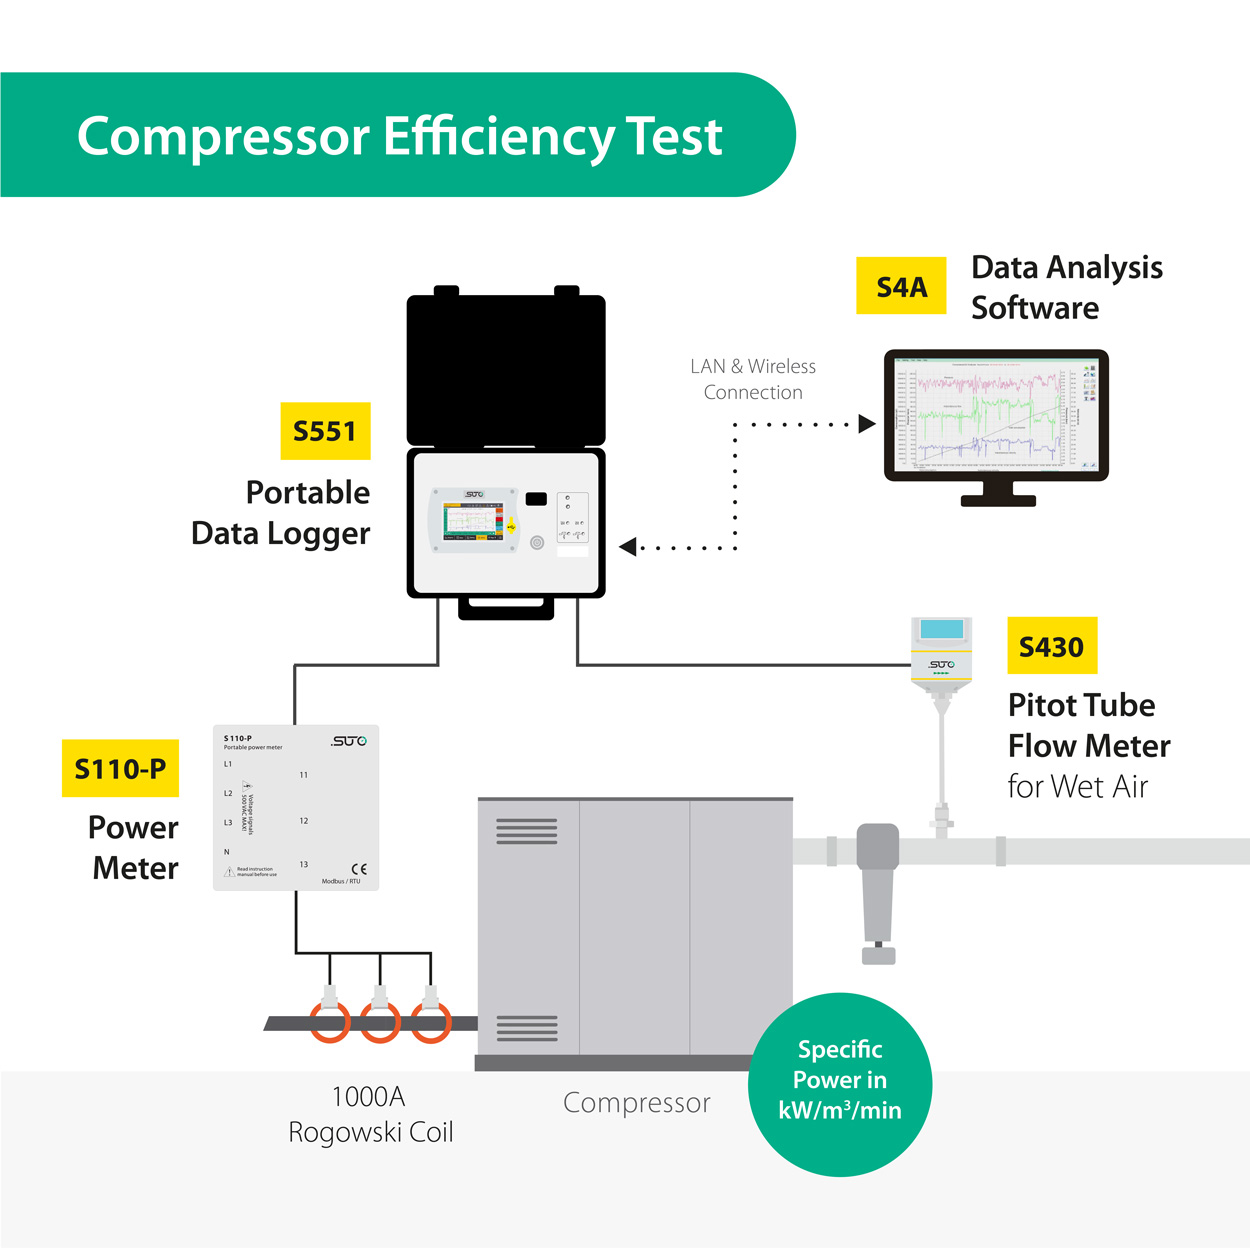 Compressor Efficiency Test